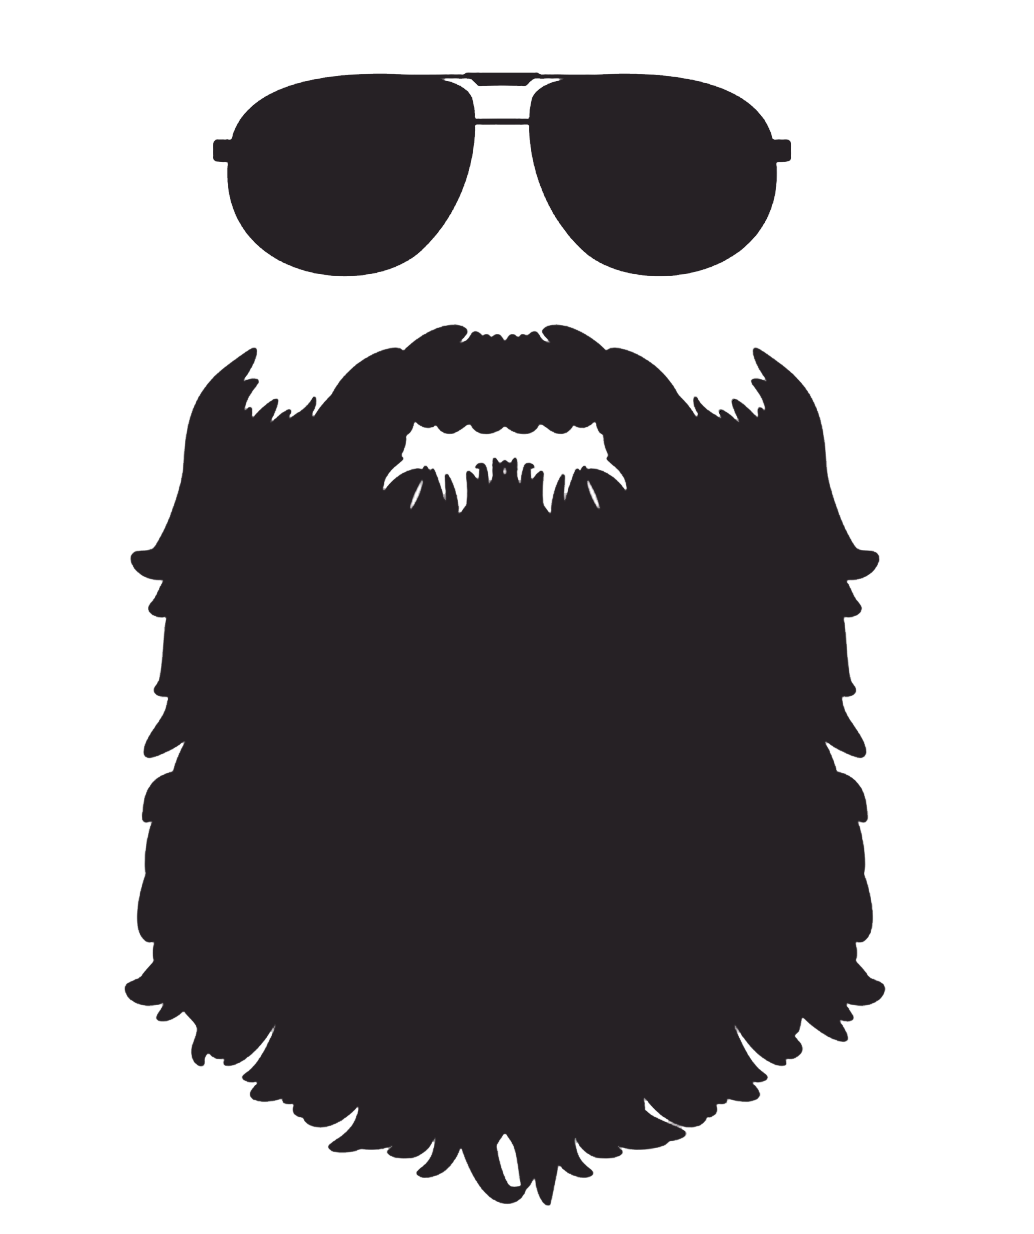 Beard Silhouette Png Black Man Beard Vector Clipart Full Size | Images ...